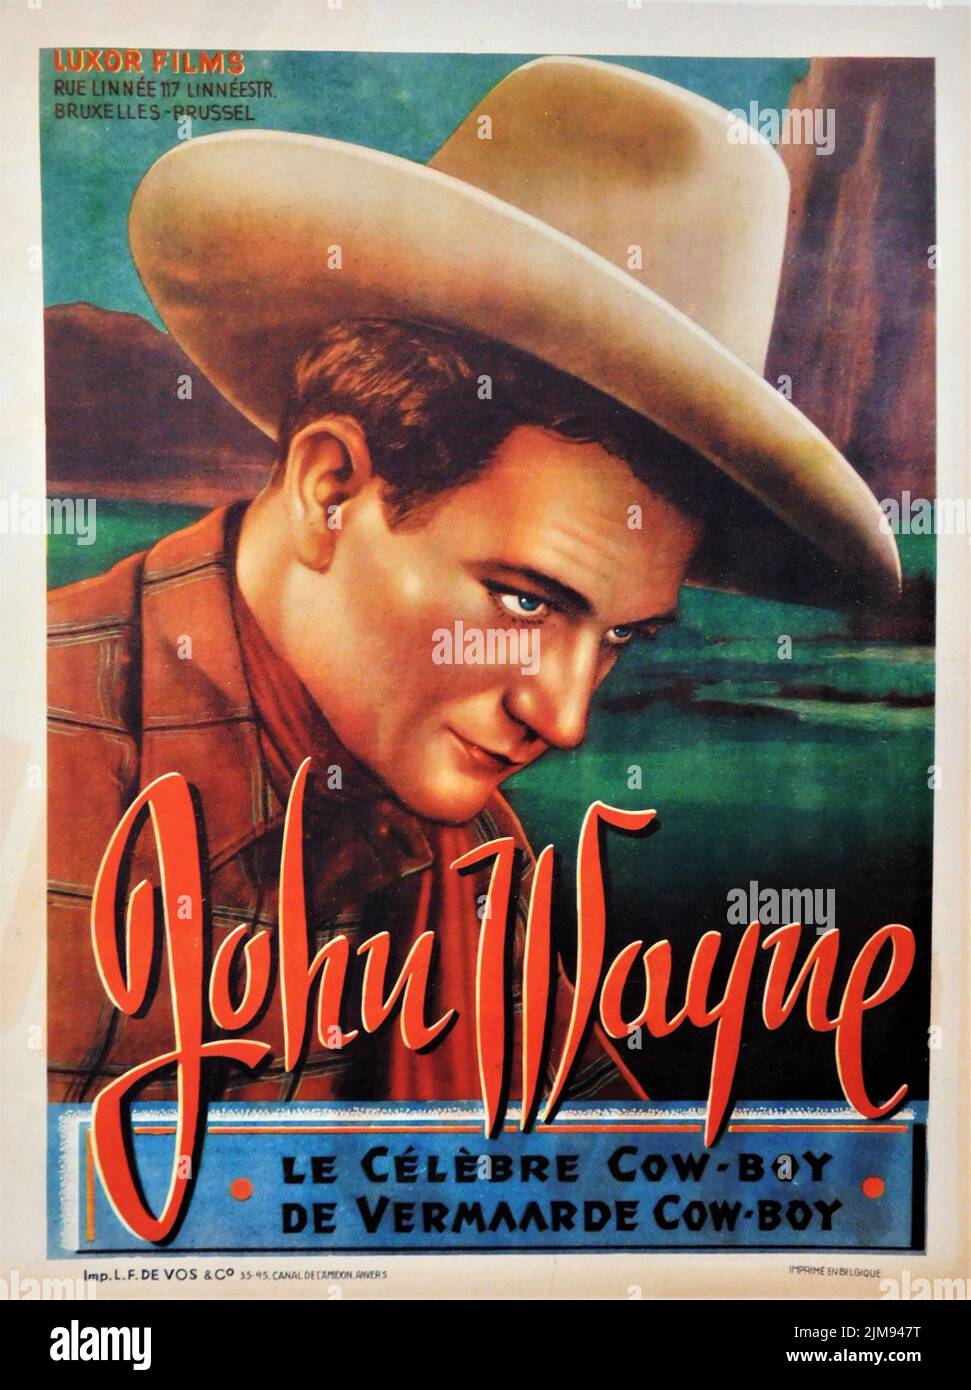 John wayne cowboy hi-res stock photography and images - Page 2 - Alamy